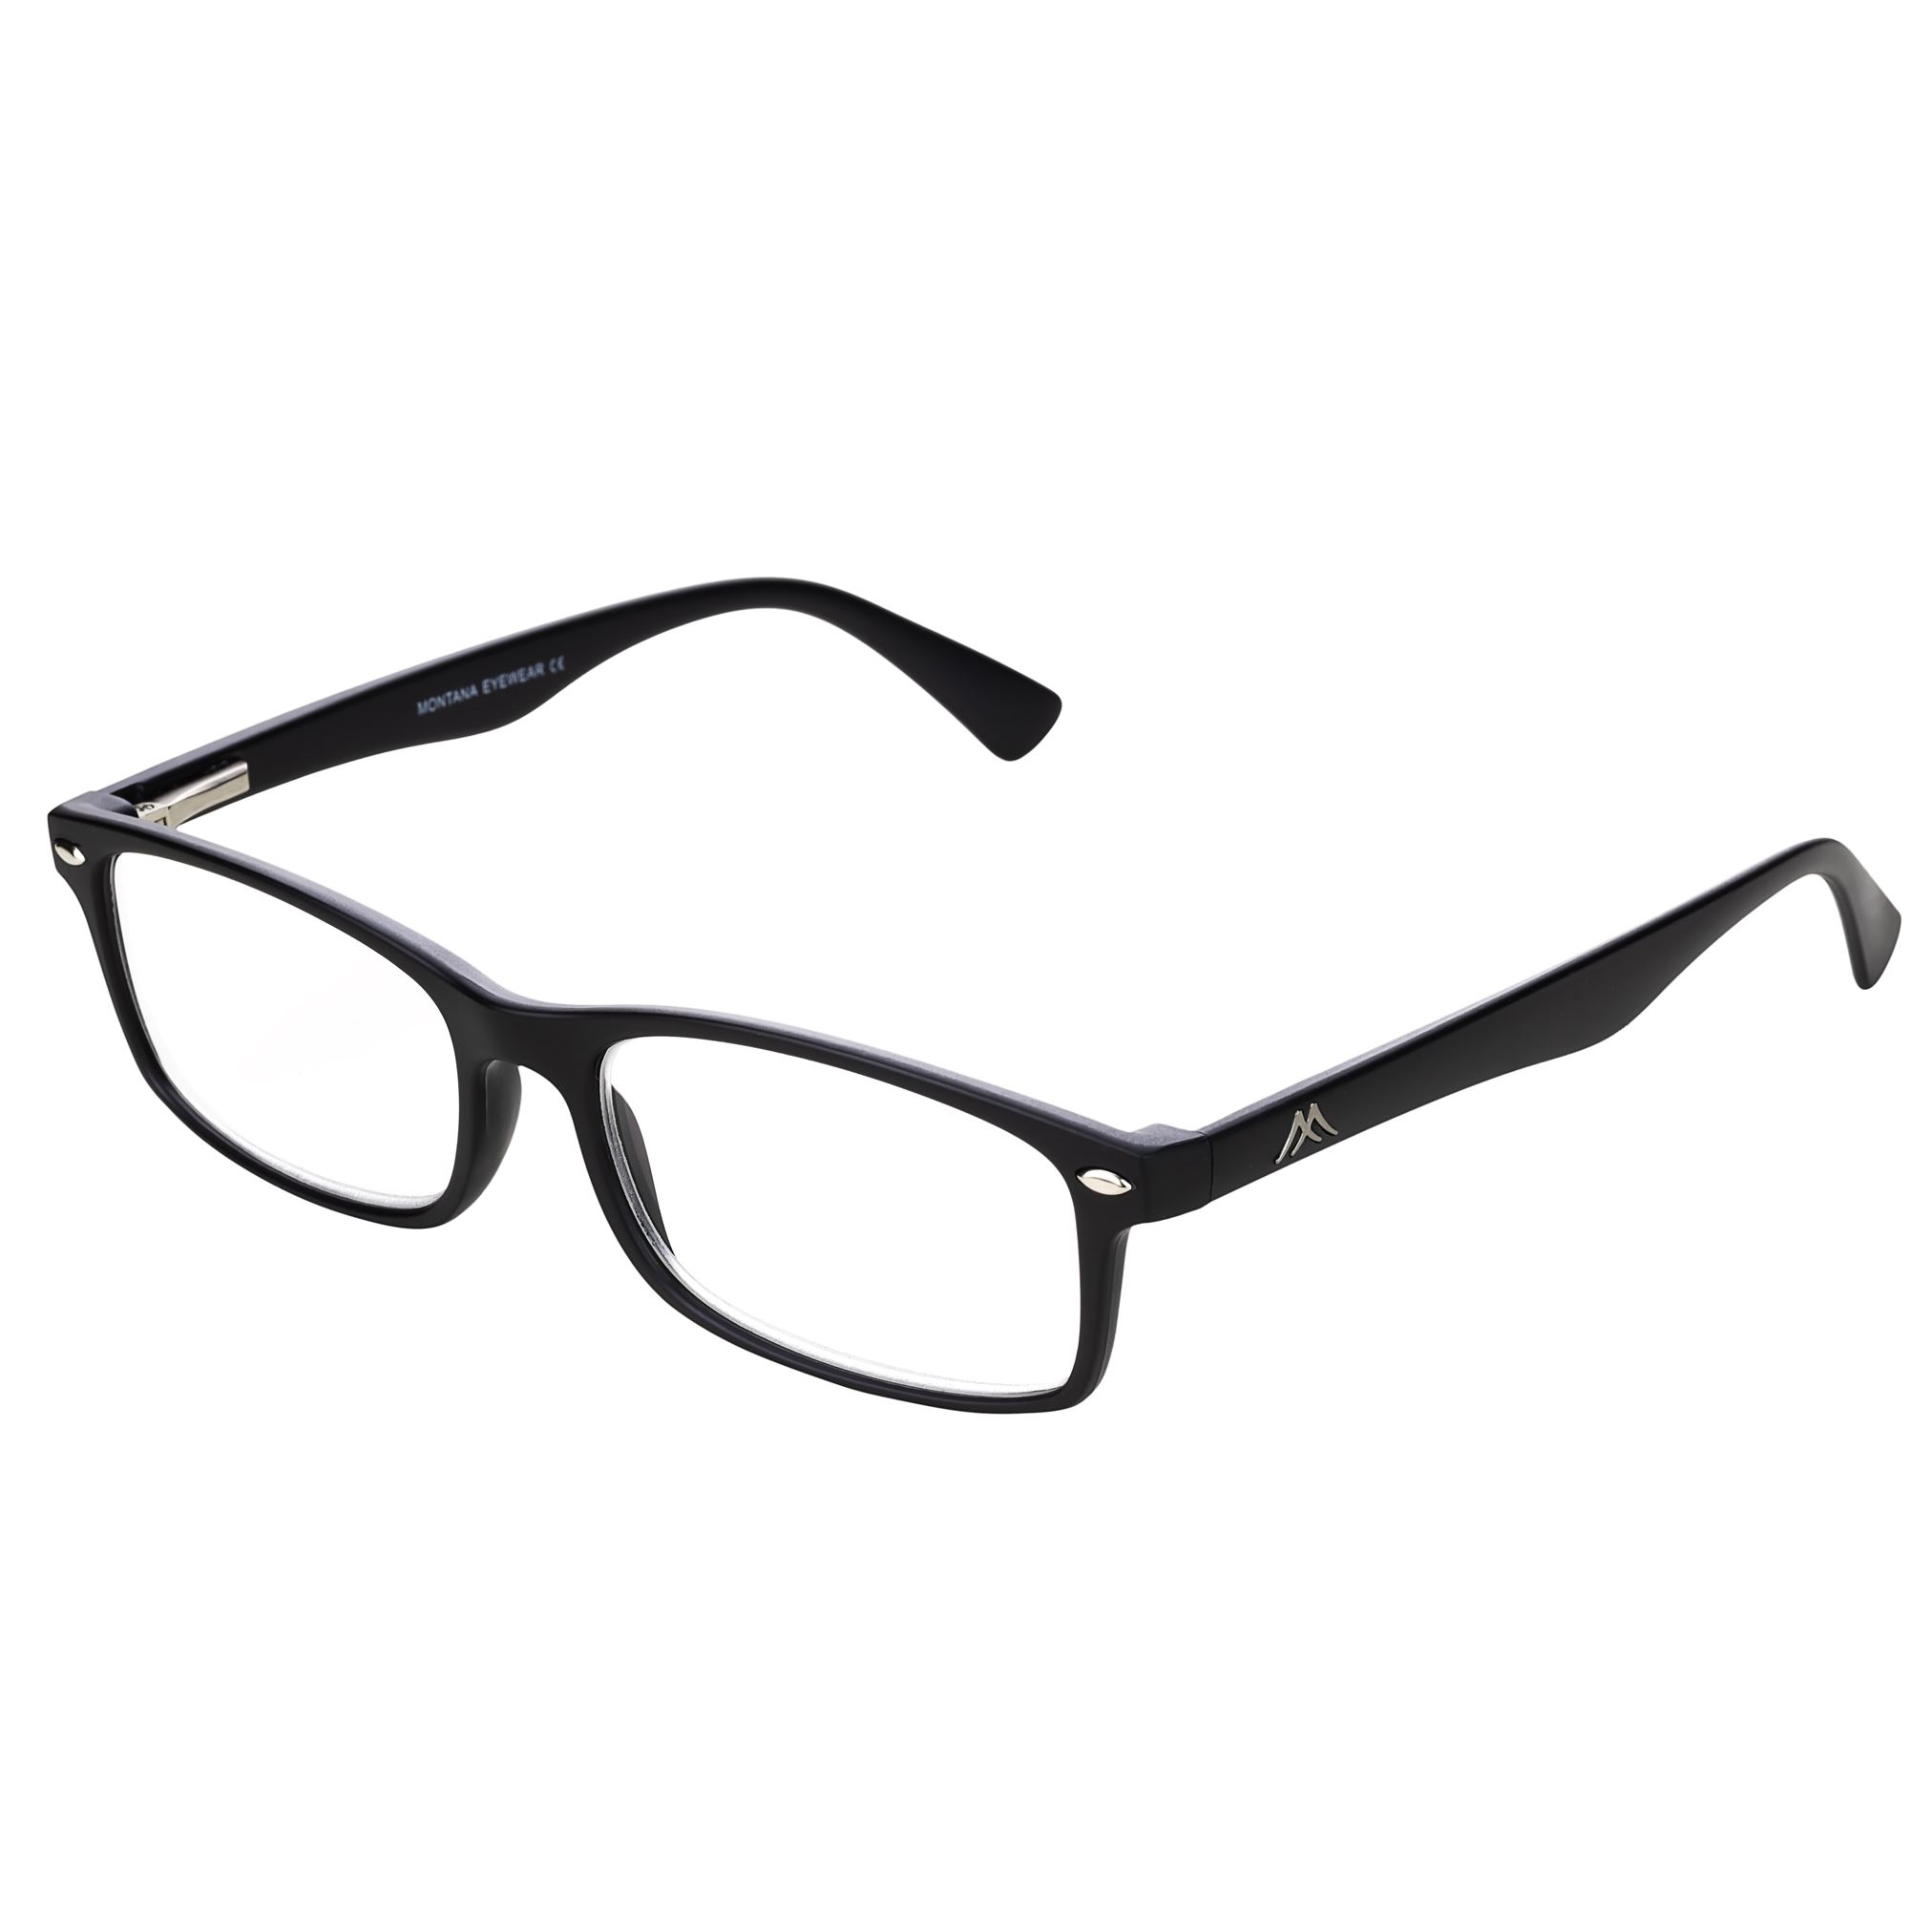 wayfarer style reading glasses